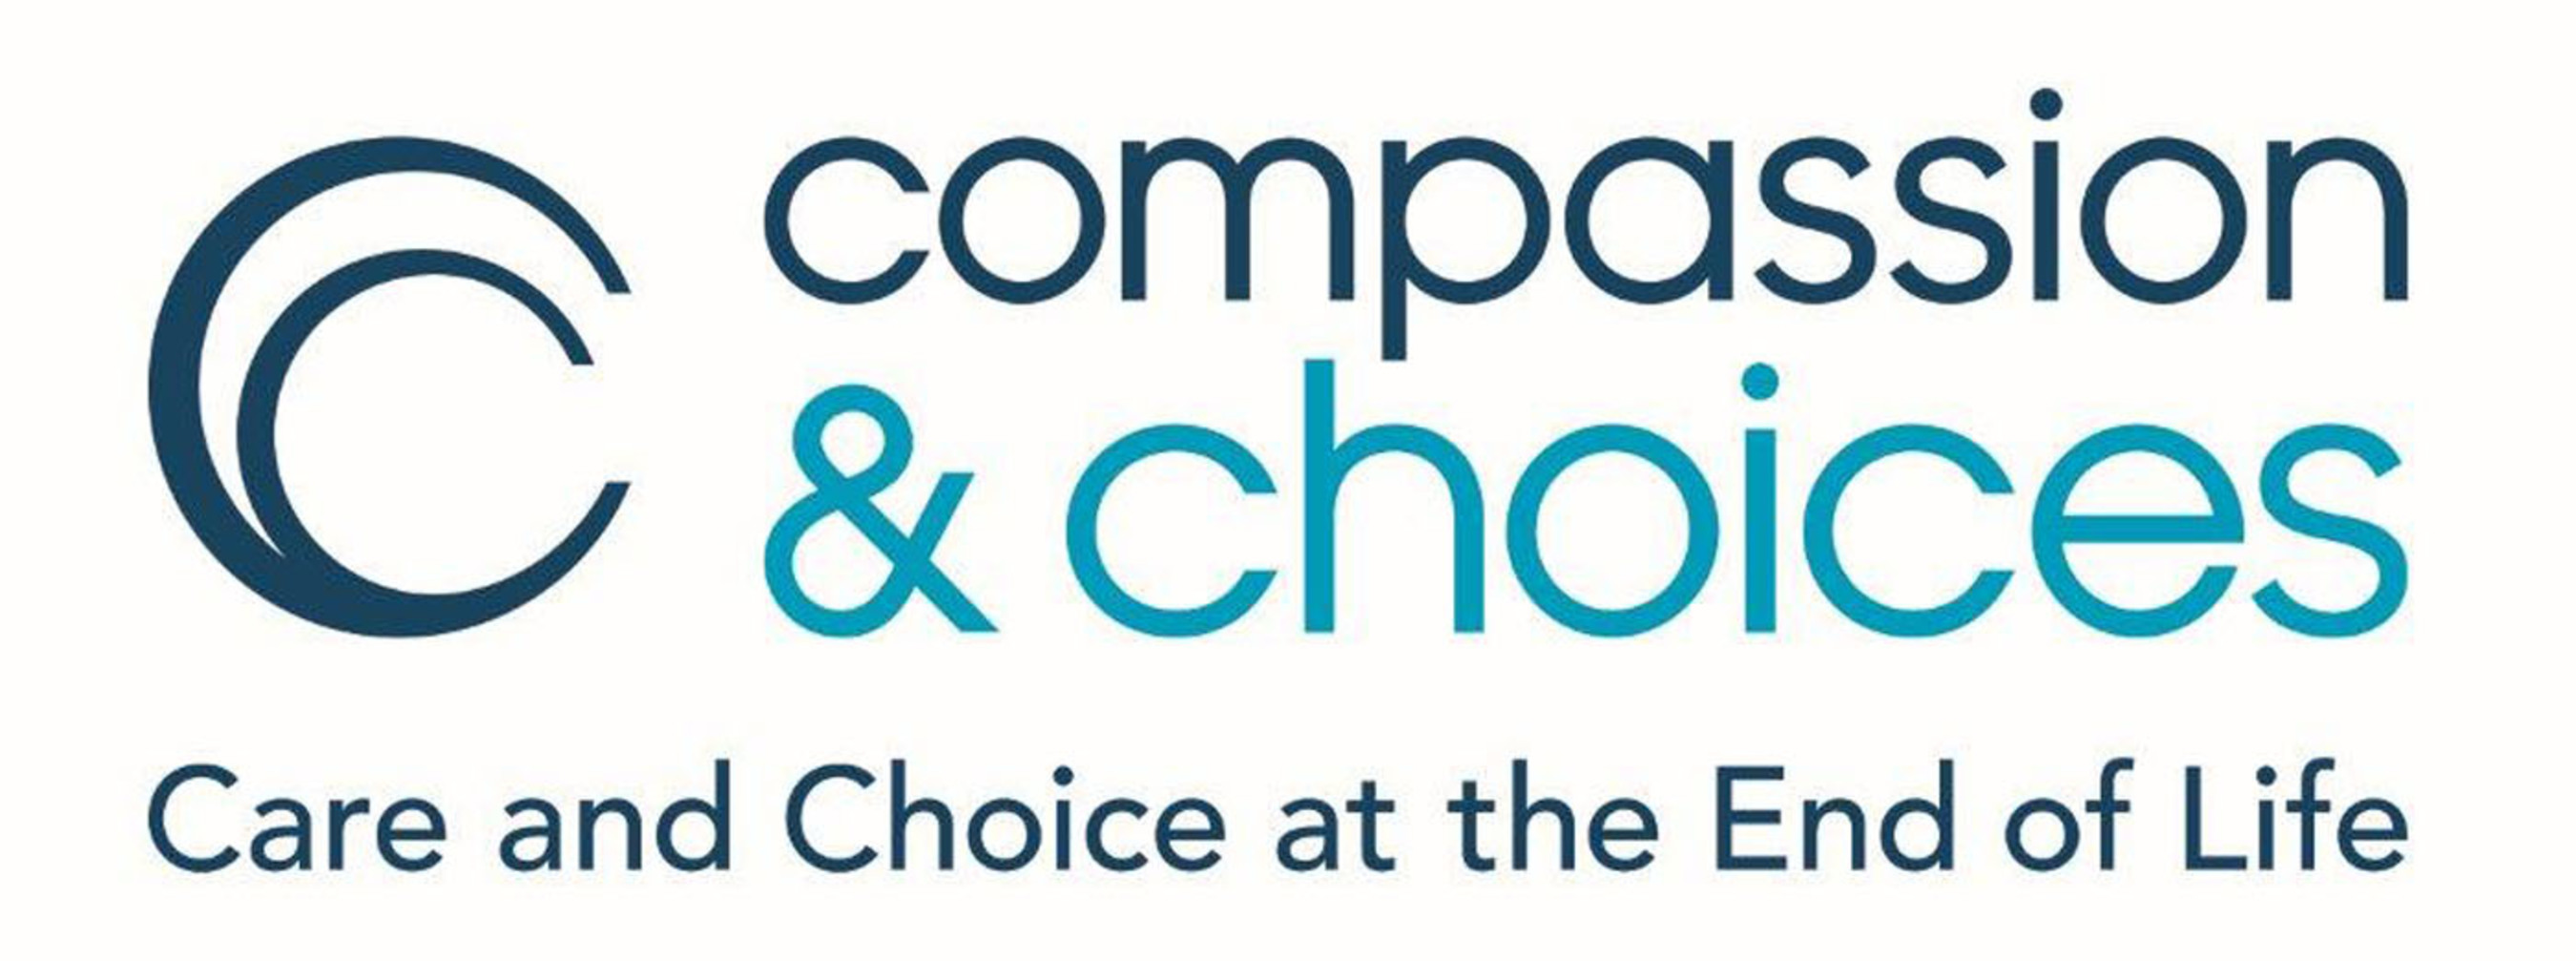 Compassion & Choices logo